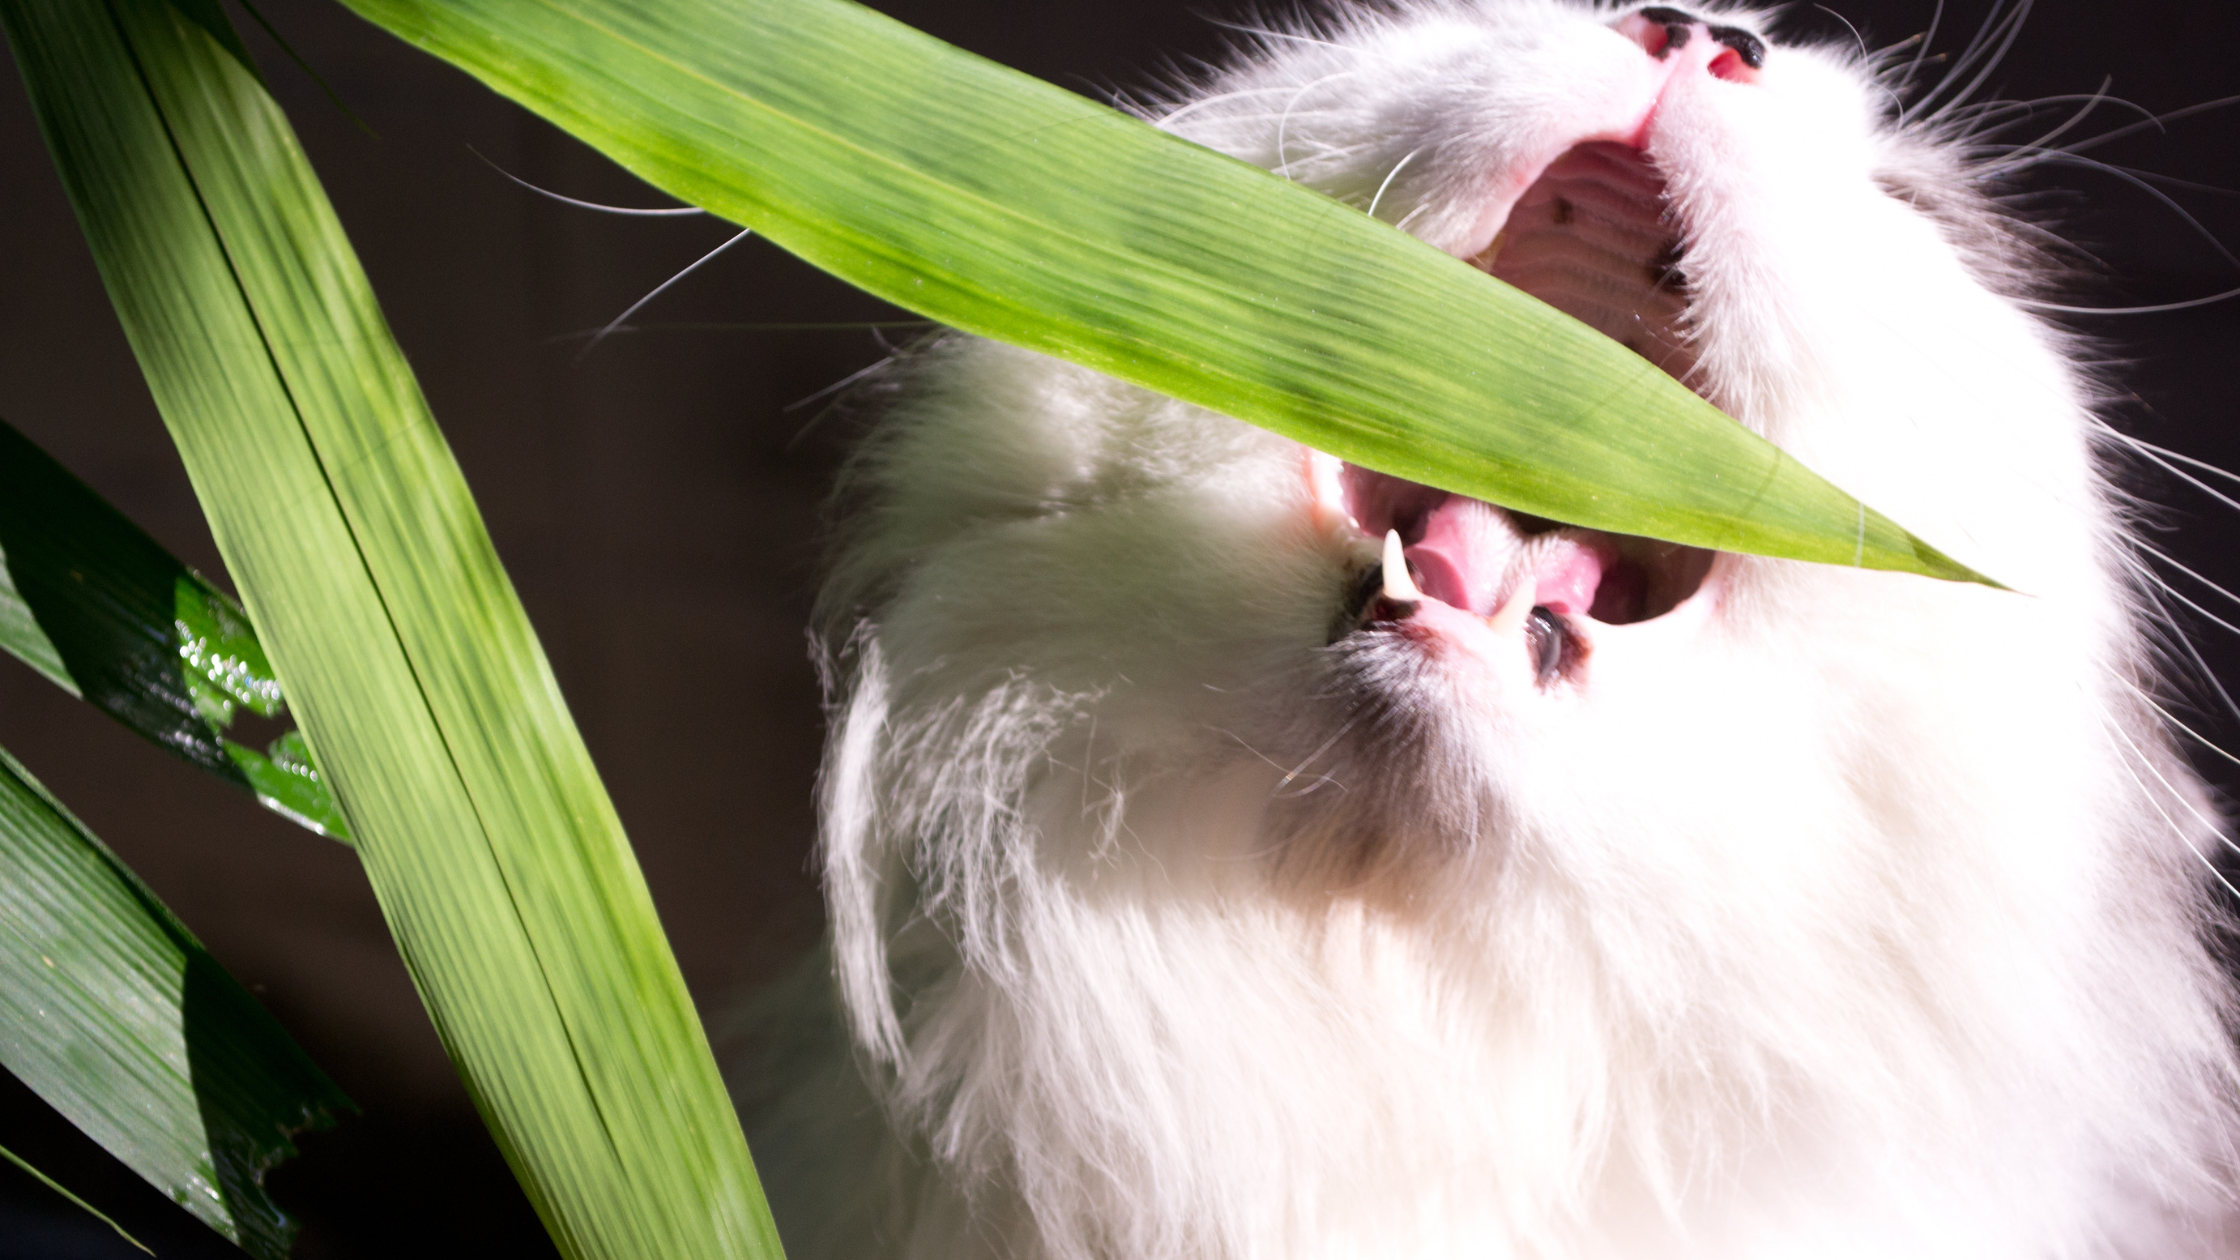 a cat munching on a palm leaf